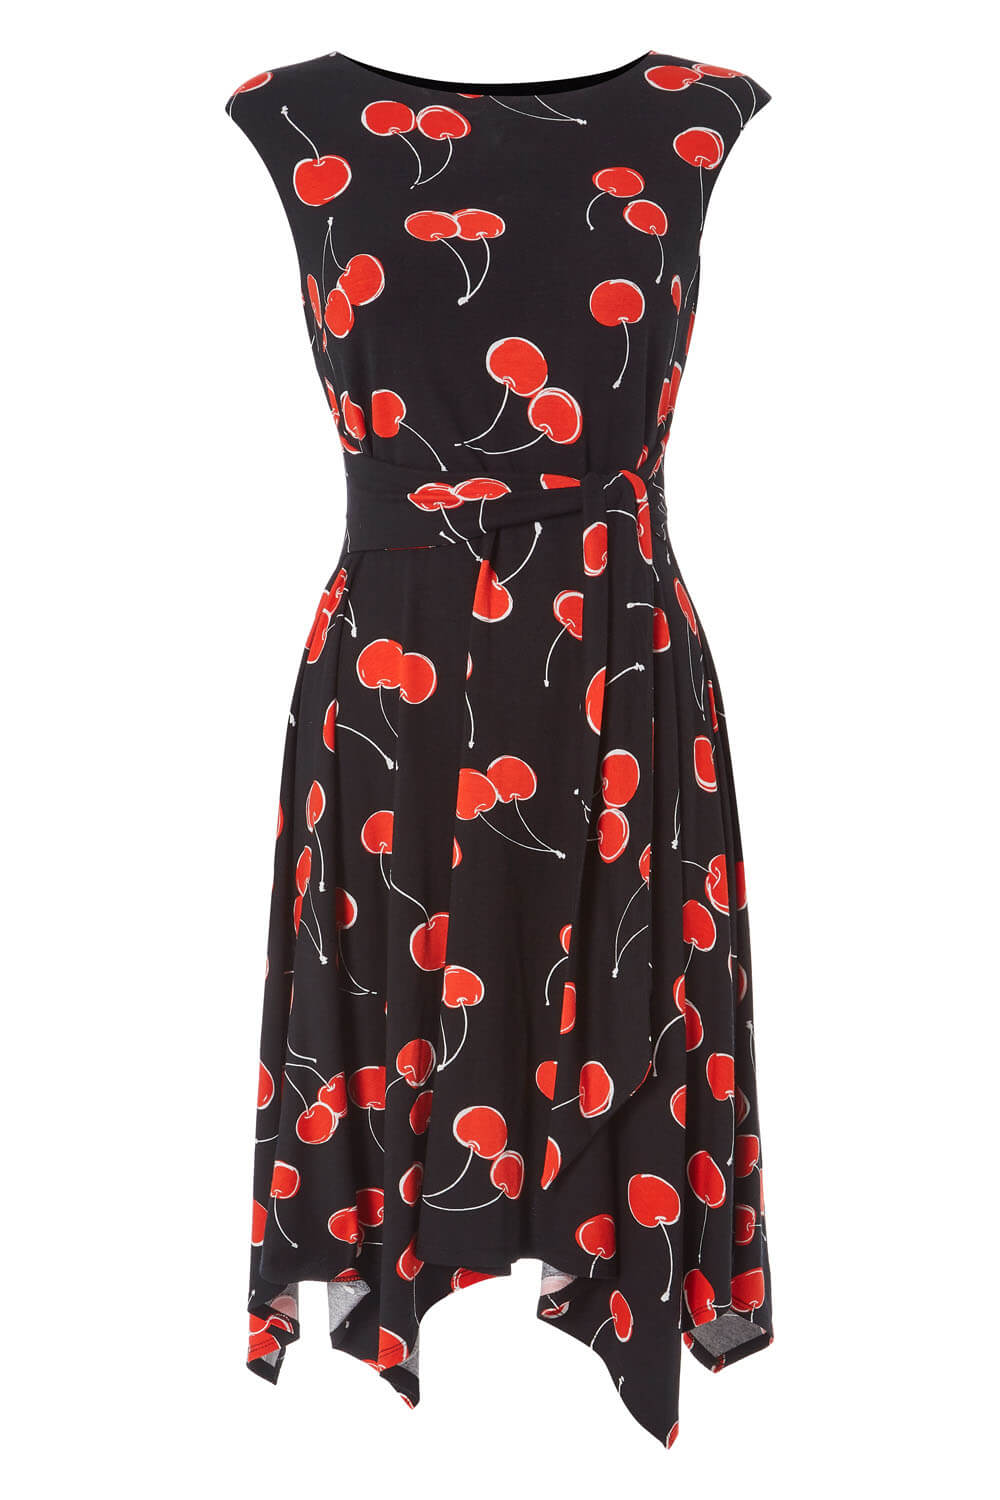 Cherry Print Hanky Hem Dress in Orange - Roman Originals UK